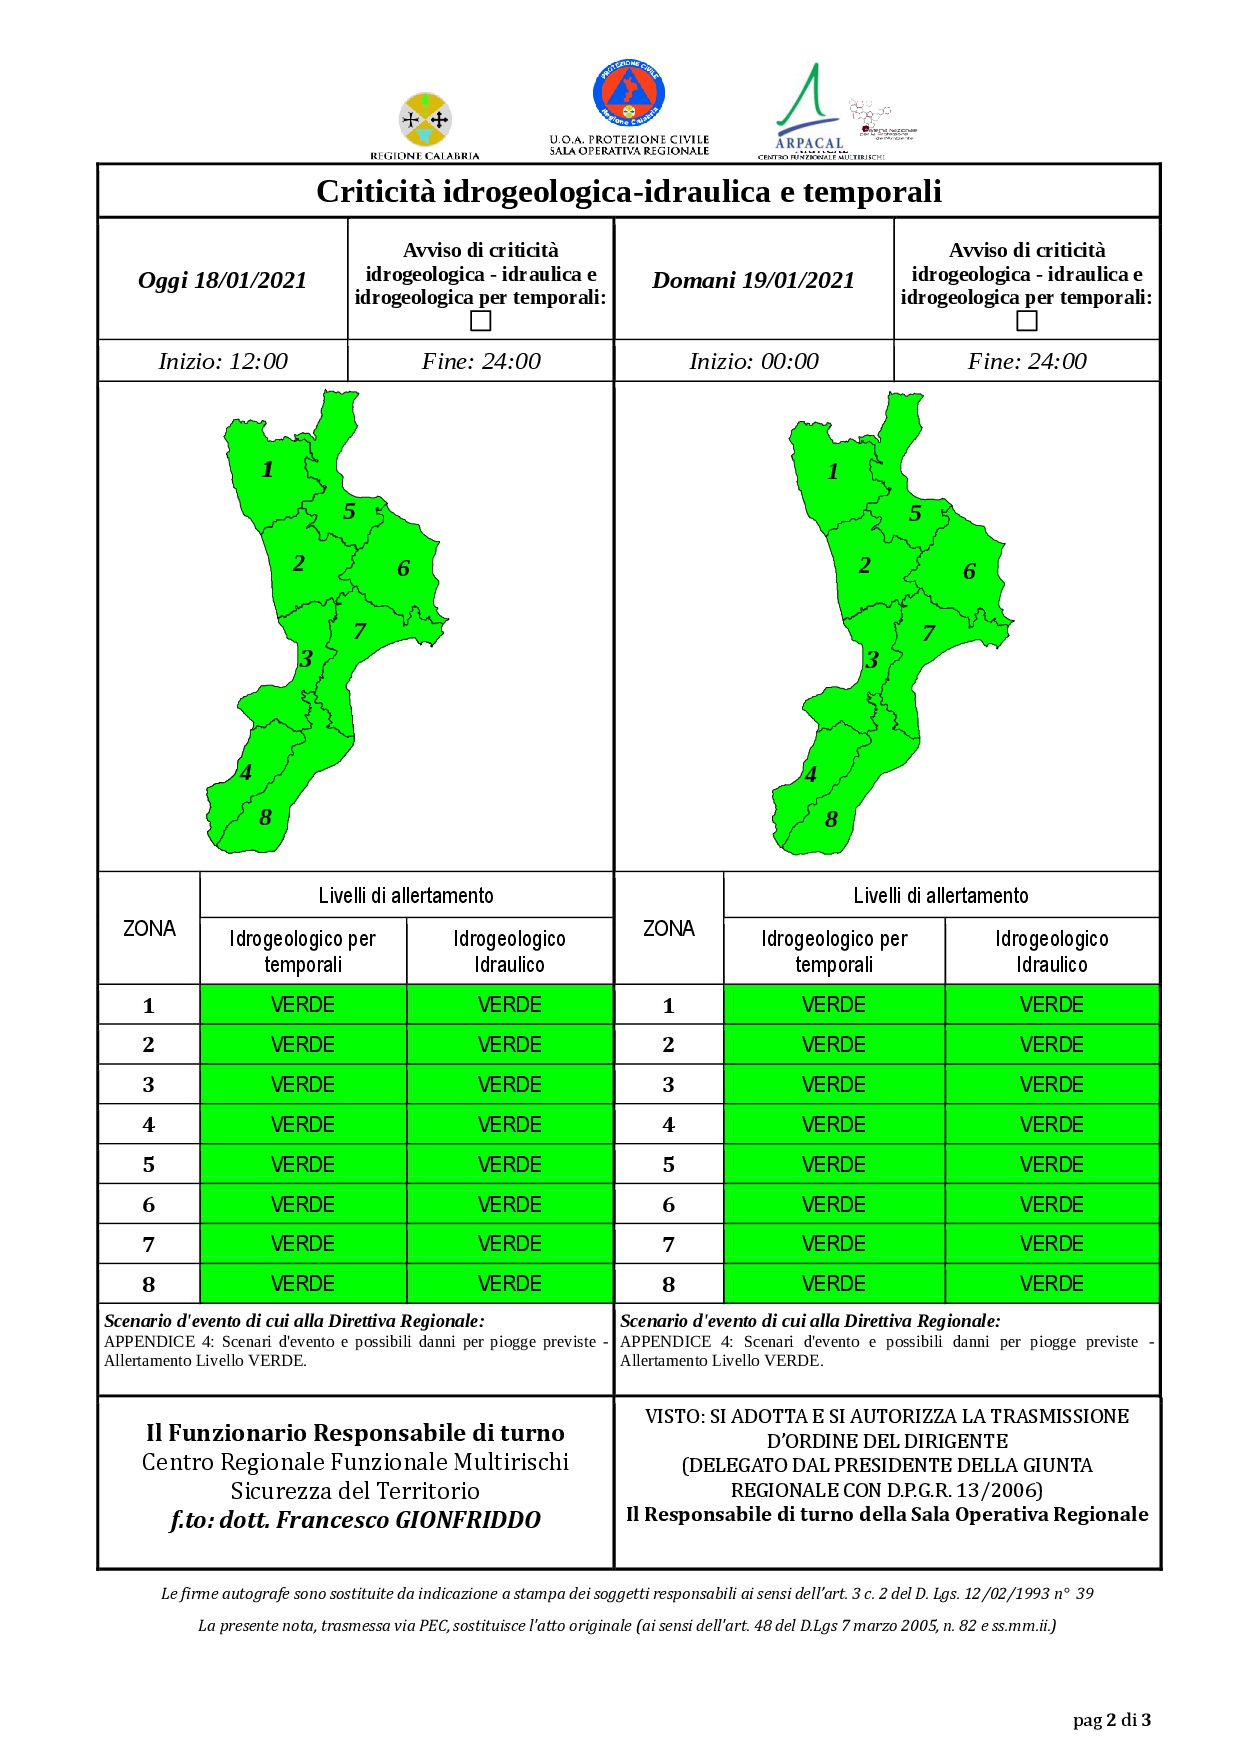 Criticità idrogeologica-idraulica e temporali in Calabria 18-01-2021